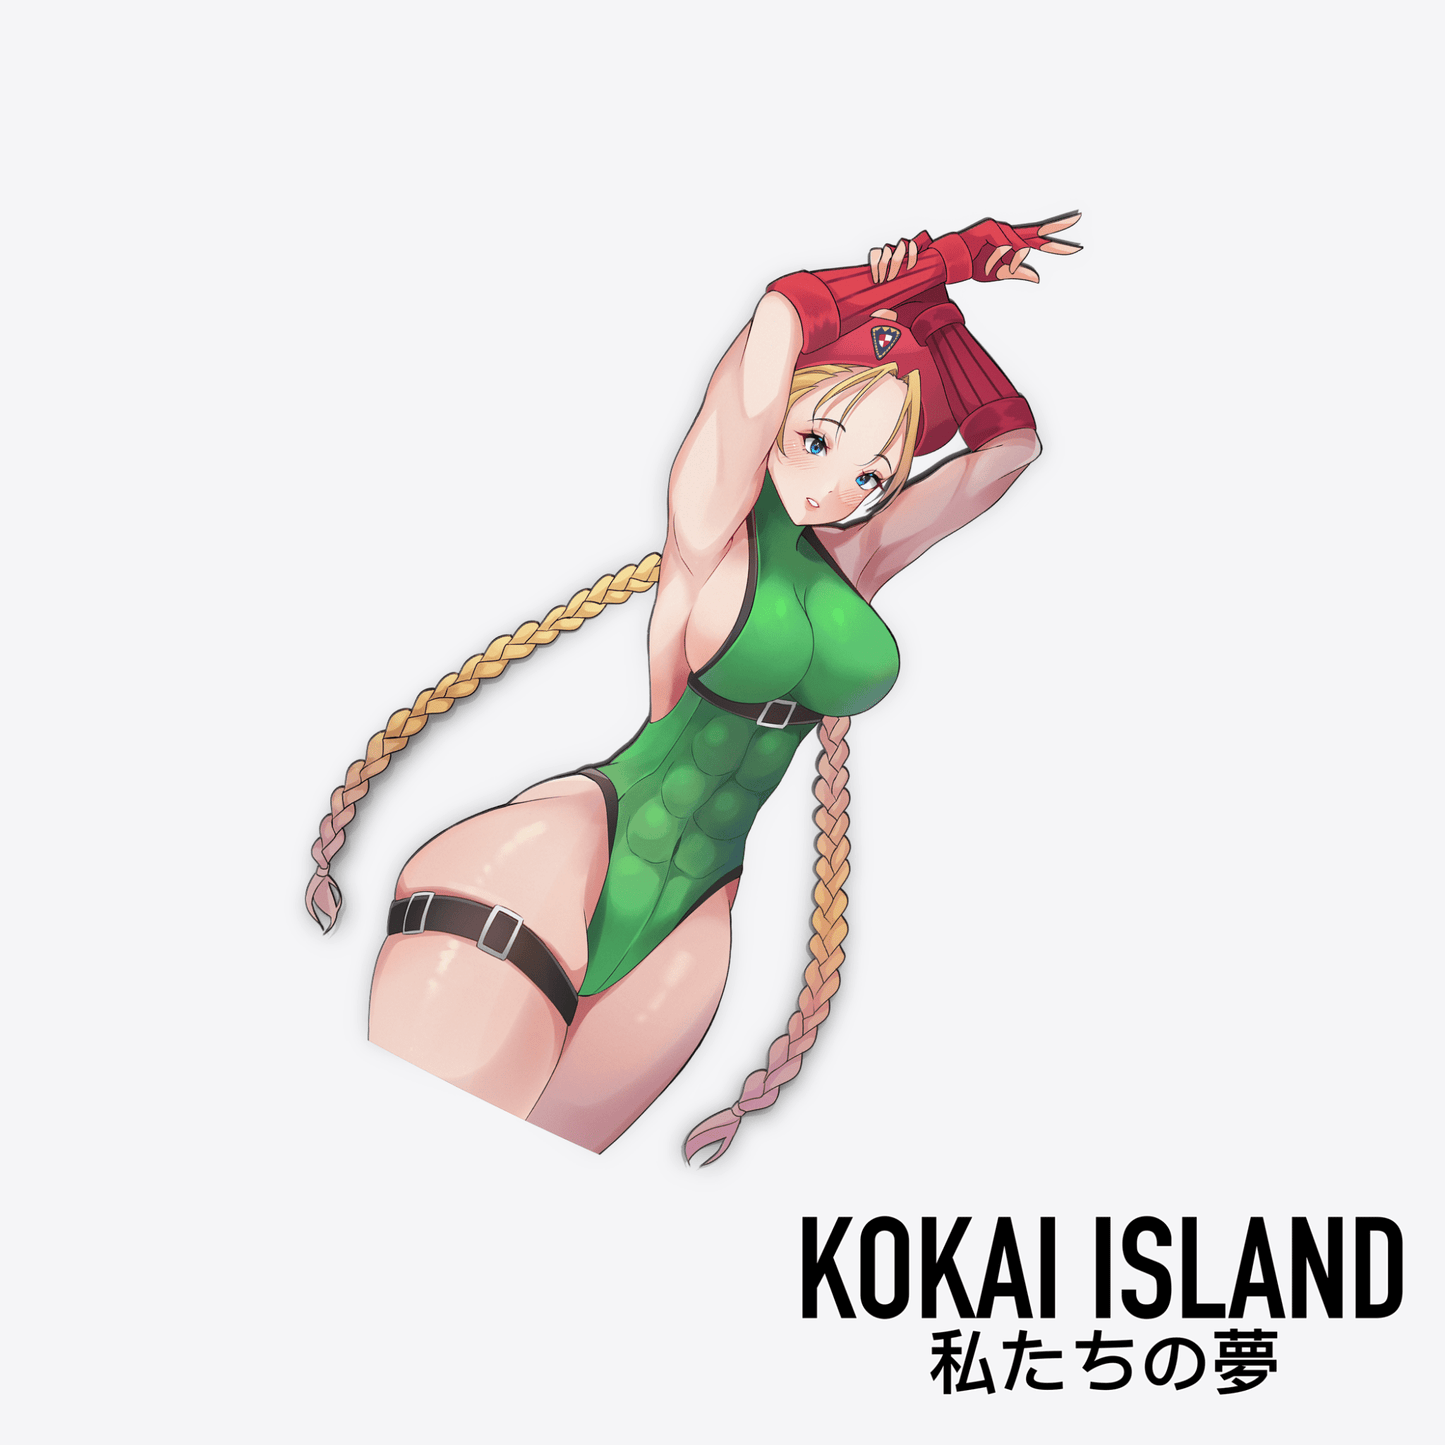 Green Fighting Girl DecalDecalKokai Island